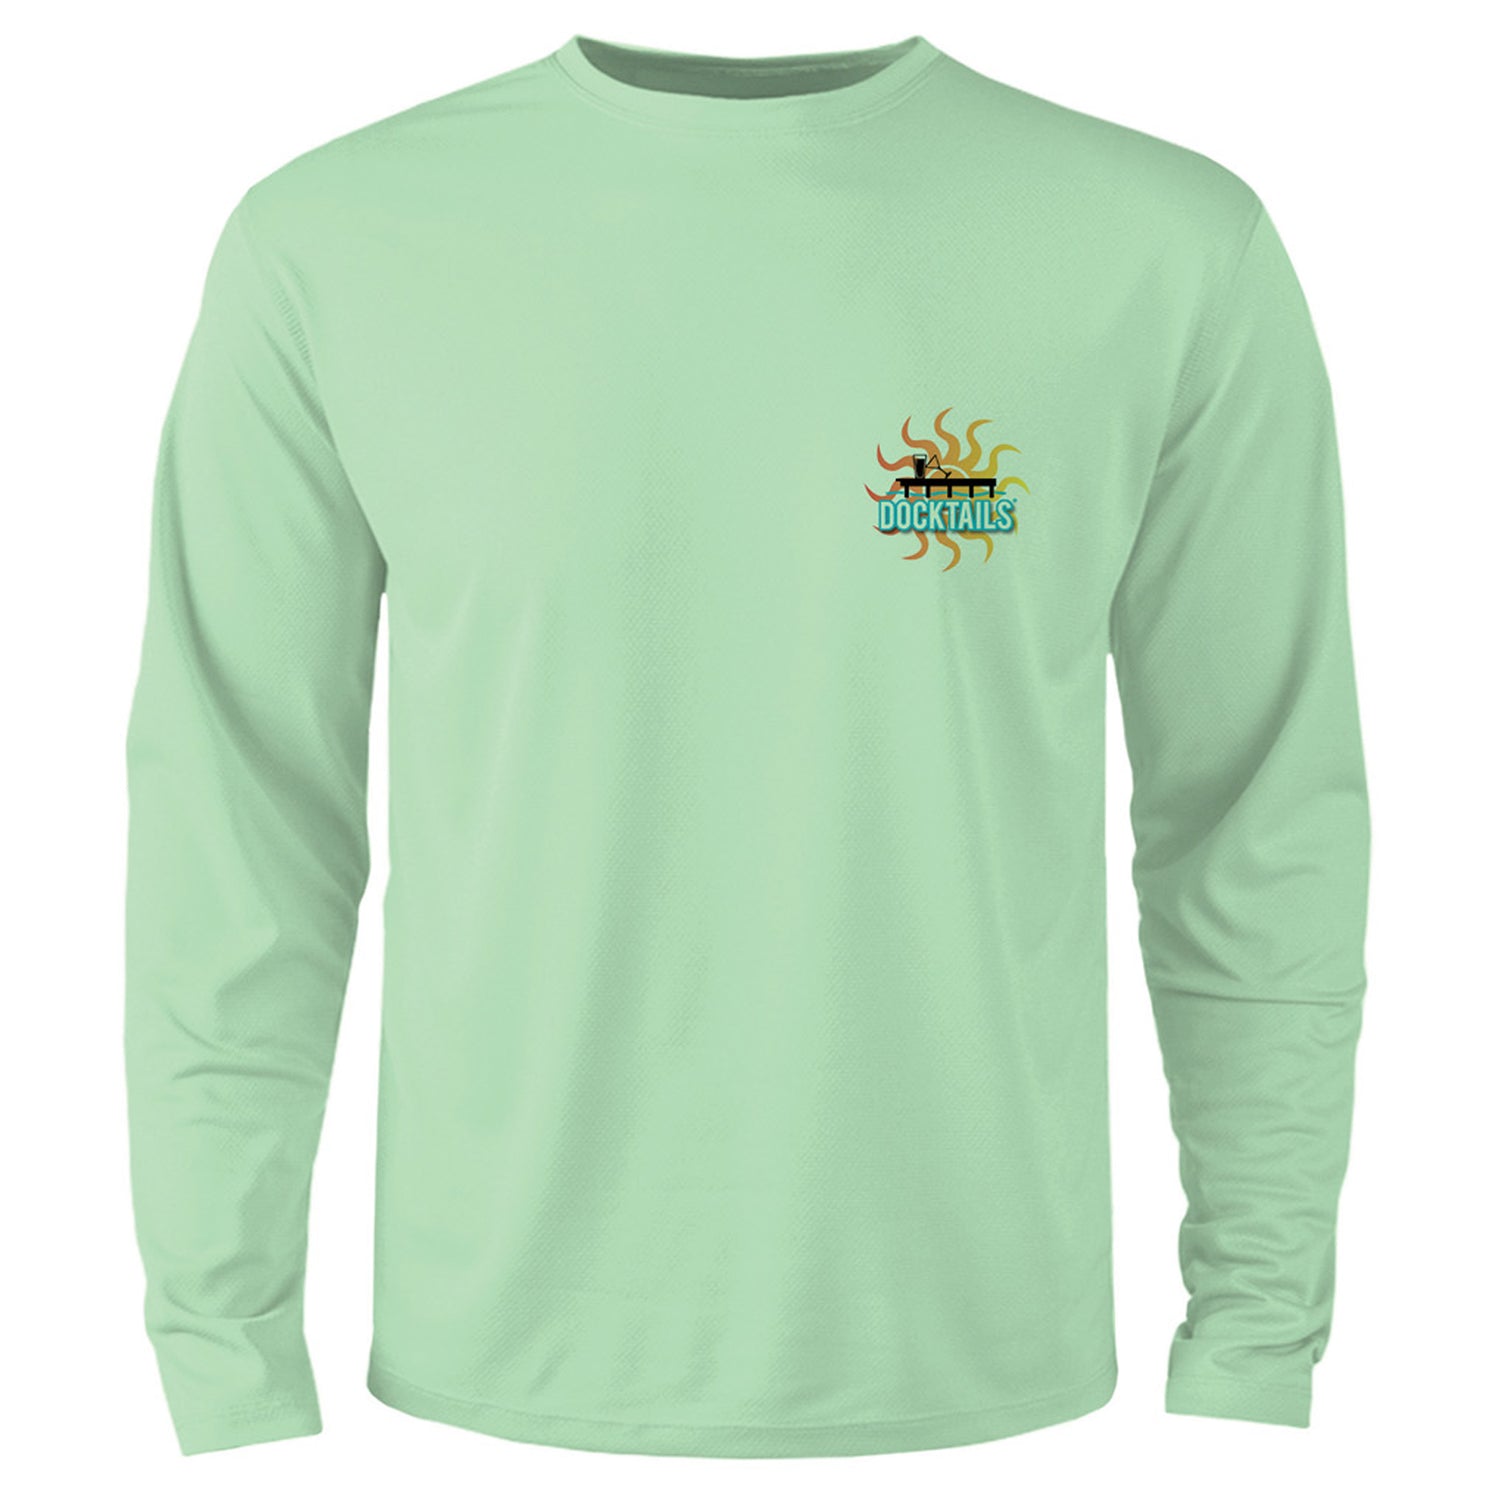 Docktails Adirondack logo men's sun shirt in green UPF 50 protection fabric front of shirt